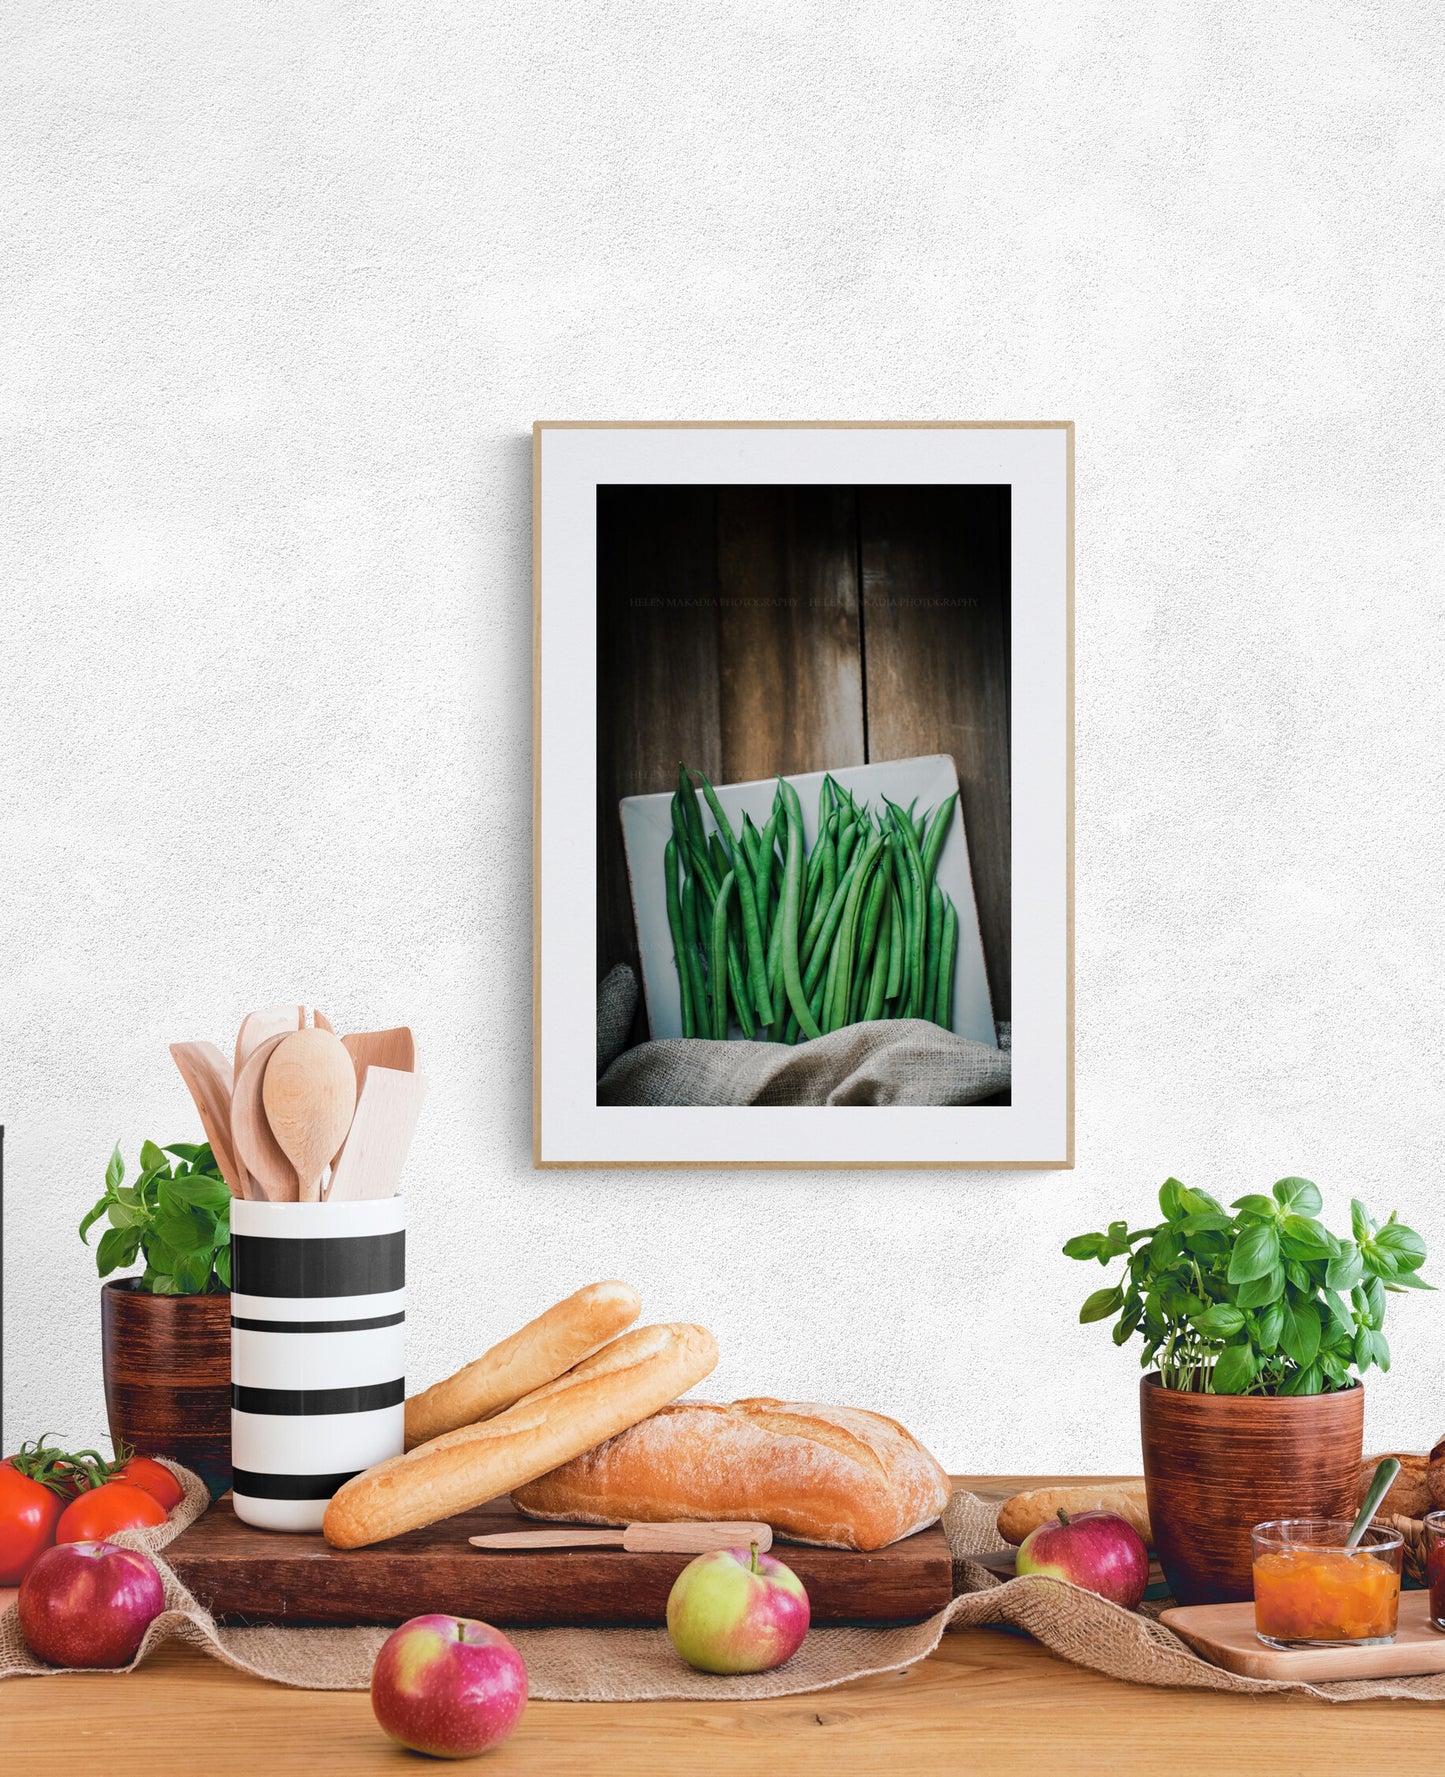 Green Beans Photograph as Wall Art Print in a Kitchen